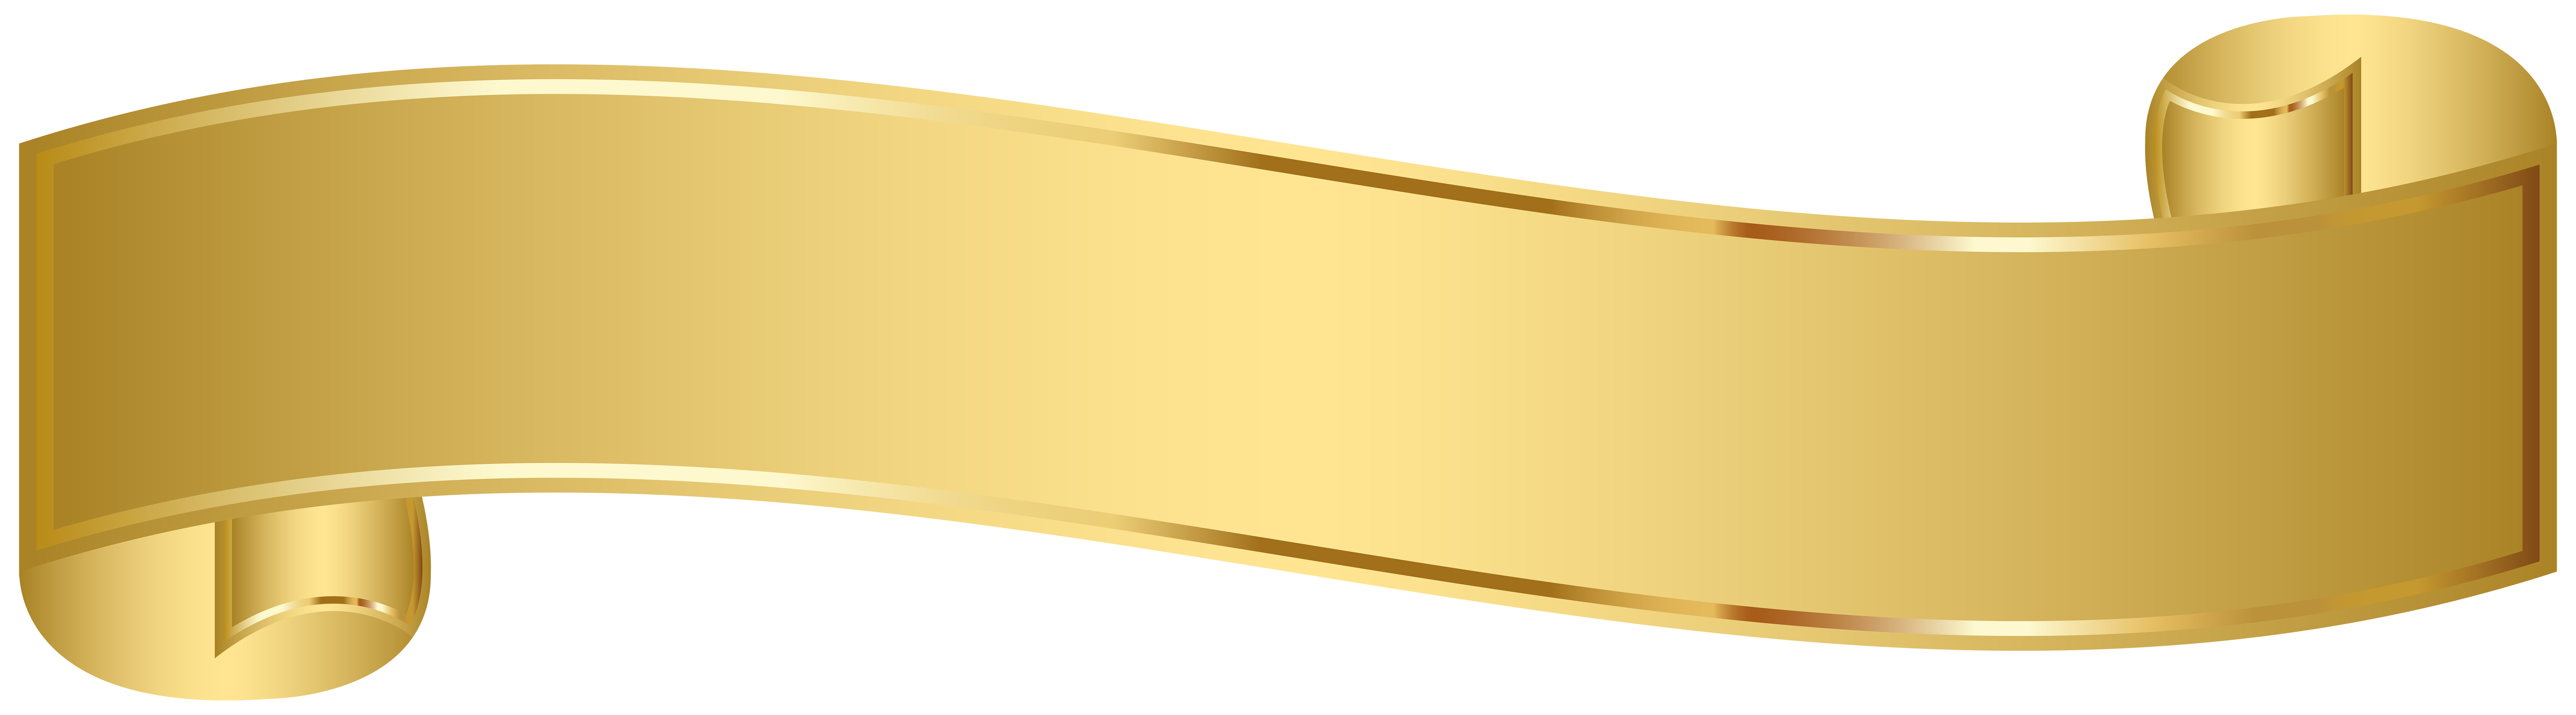 Gambar Transparan banner emas